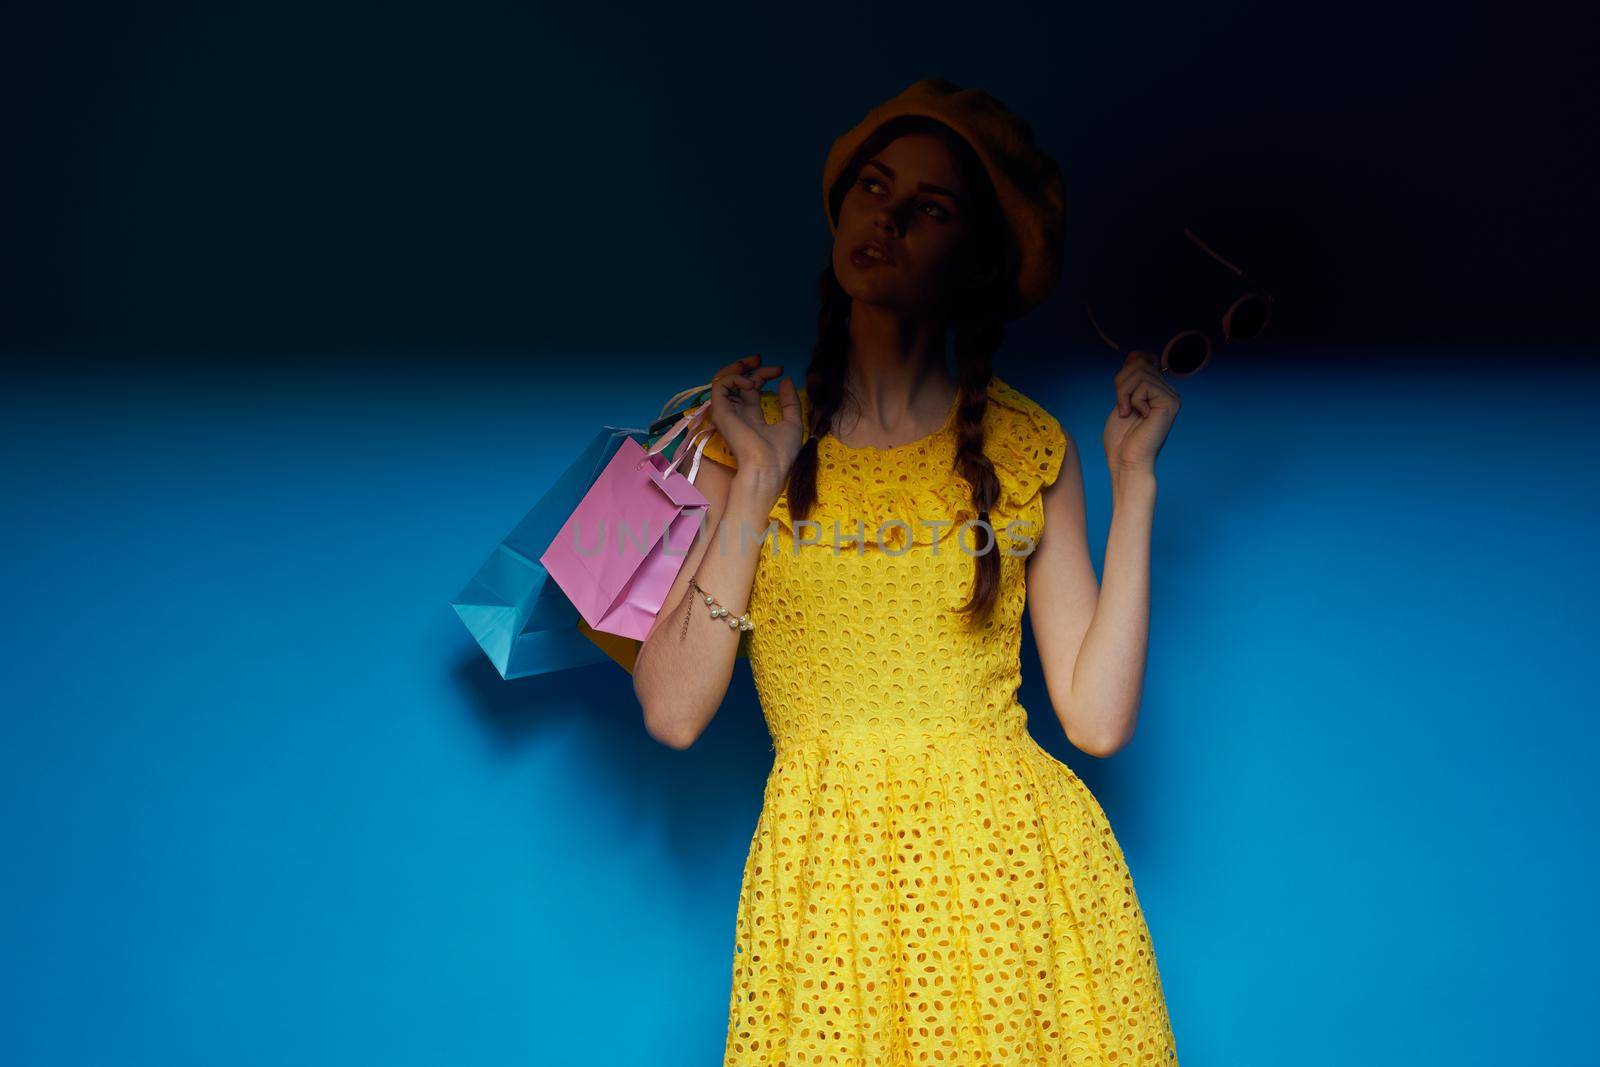 pretty woman in a yellow hat Shopaholic fashion style studio model by Vichizh